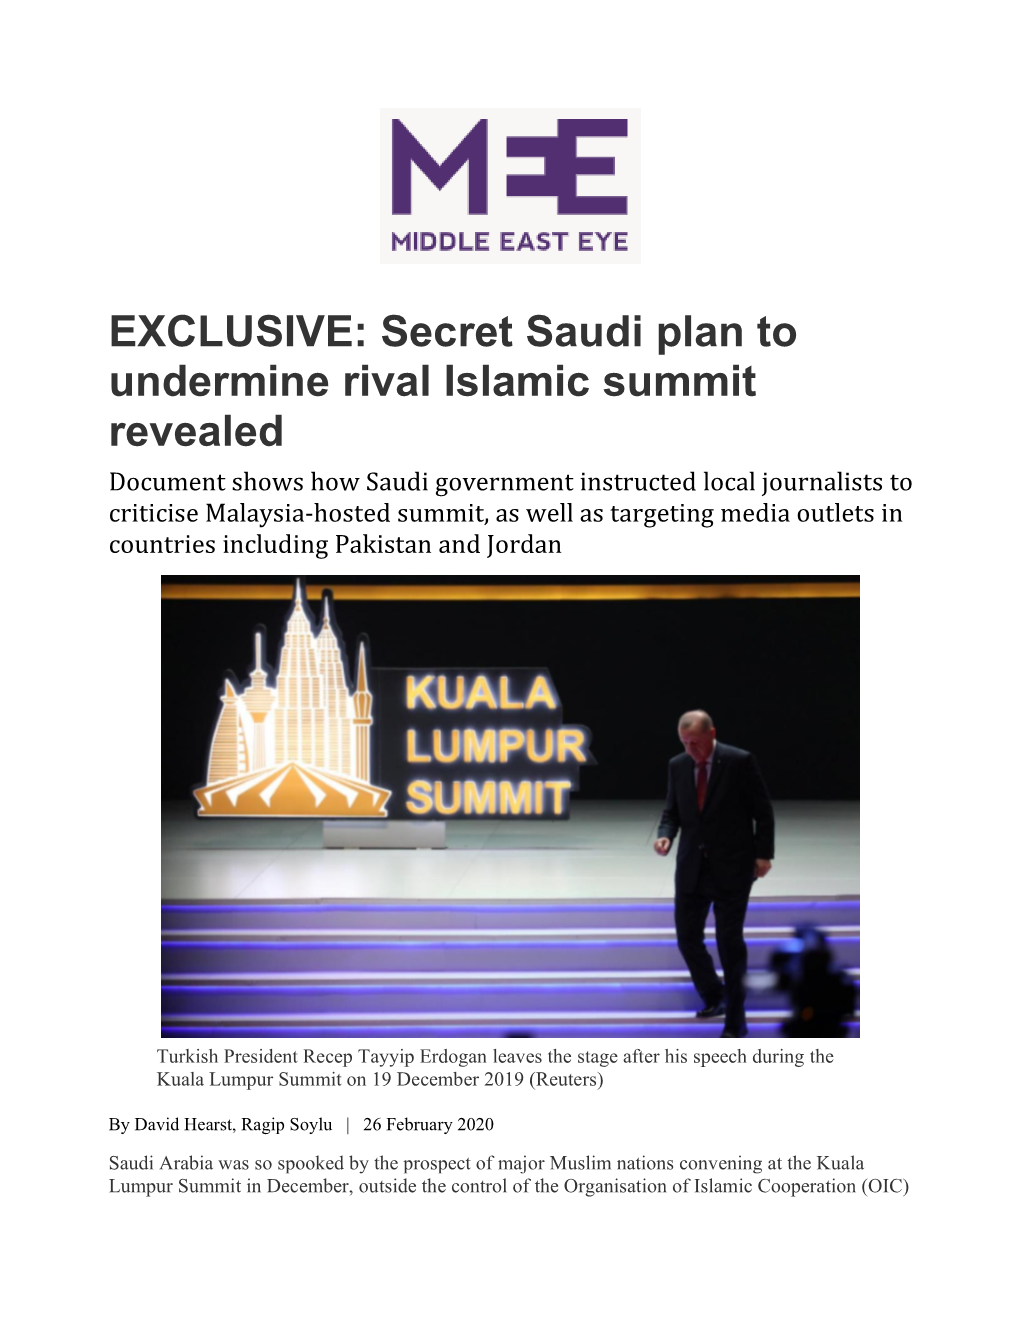 EXCLUSIVE: Secret Saudi Plan to Undermine Rival